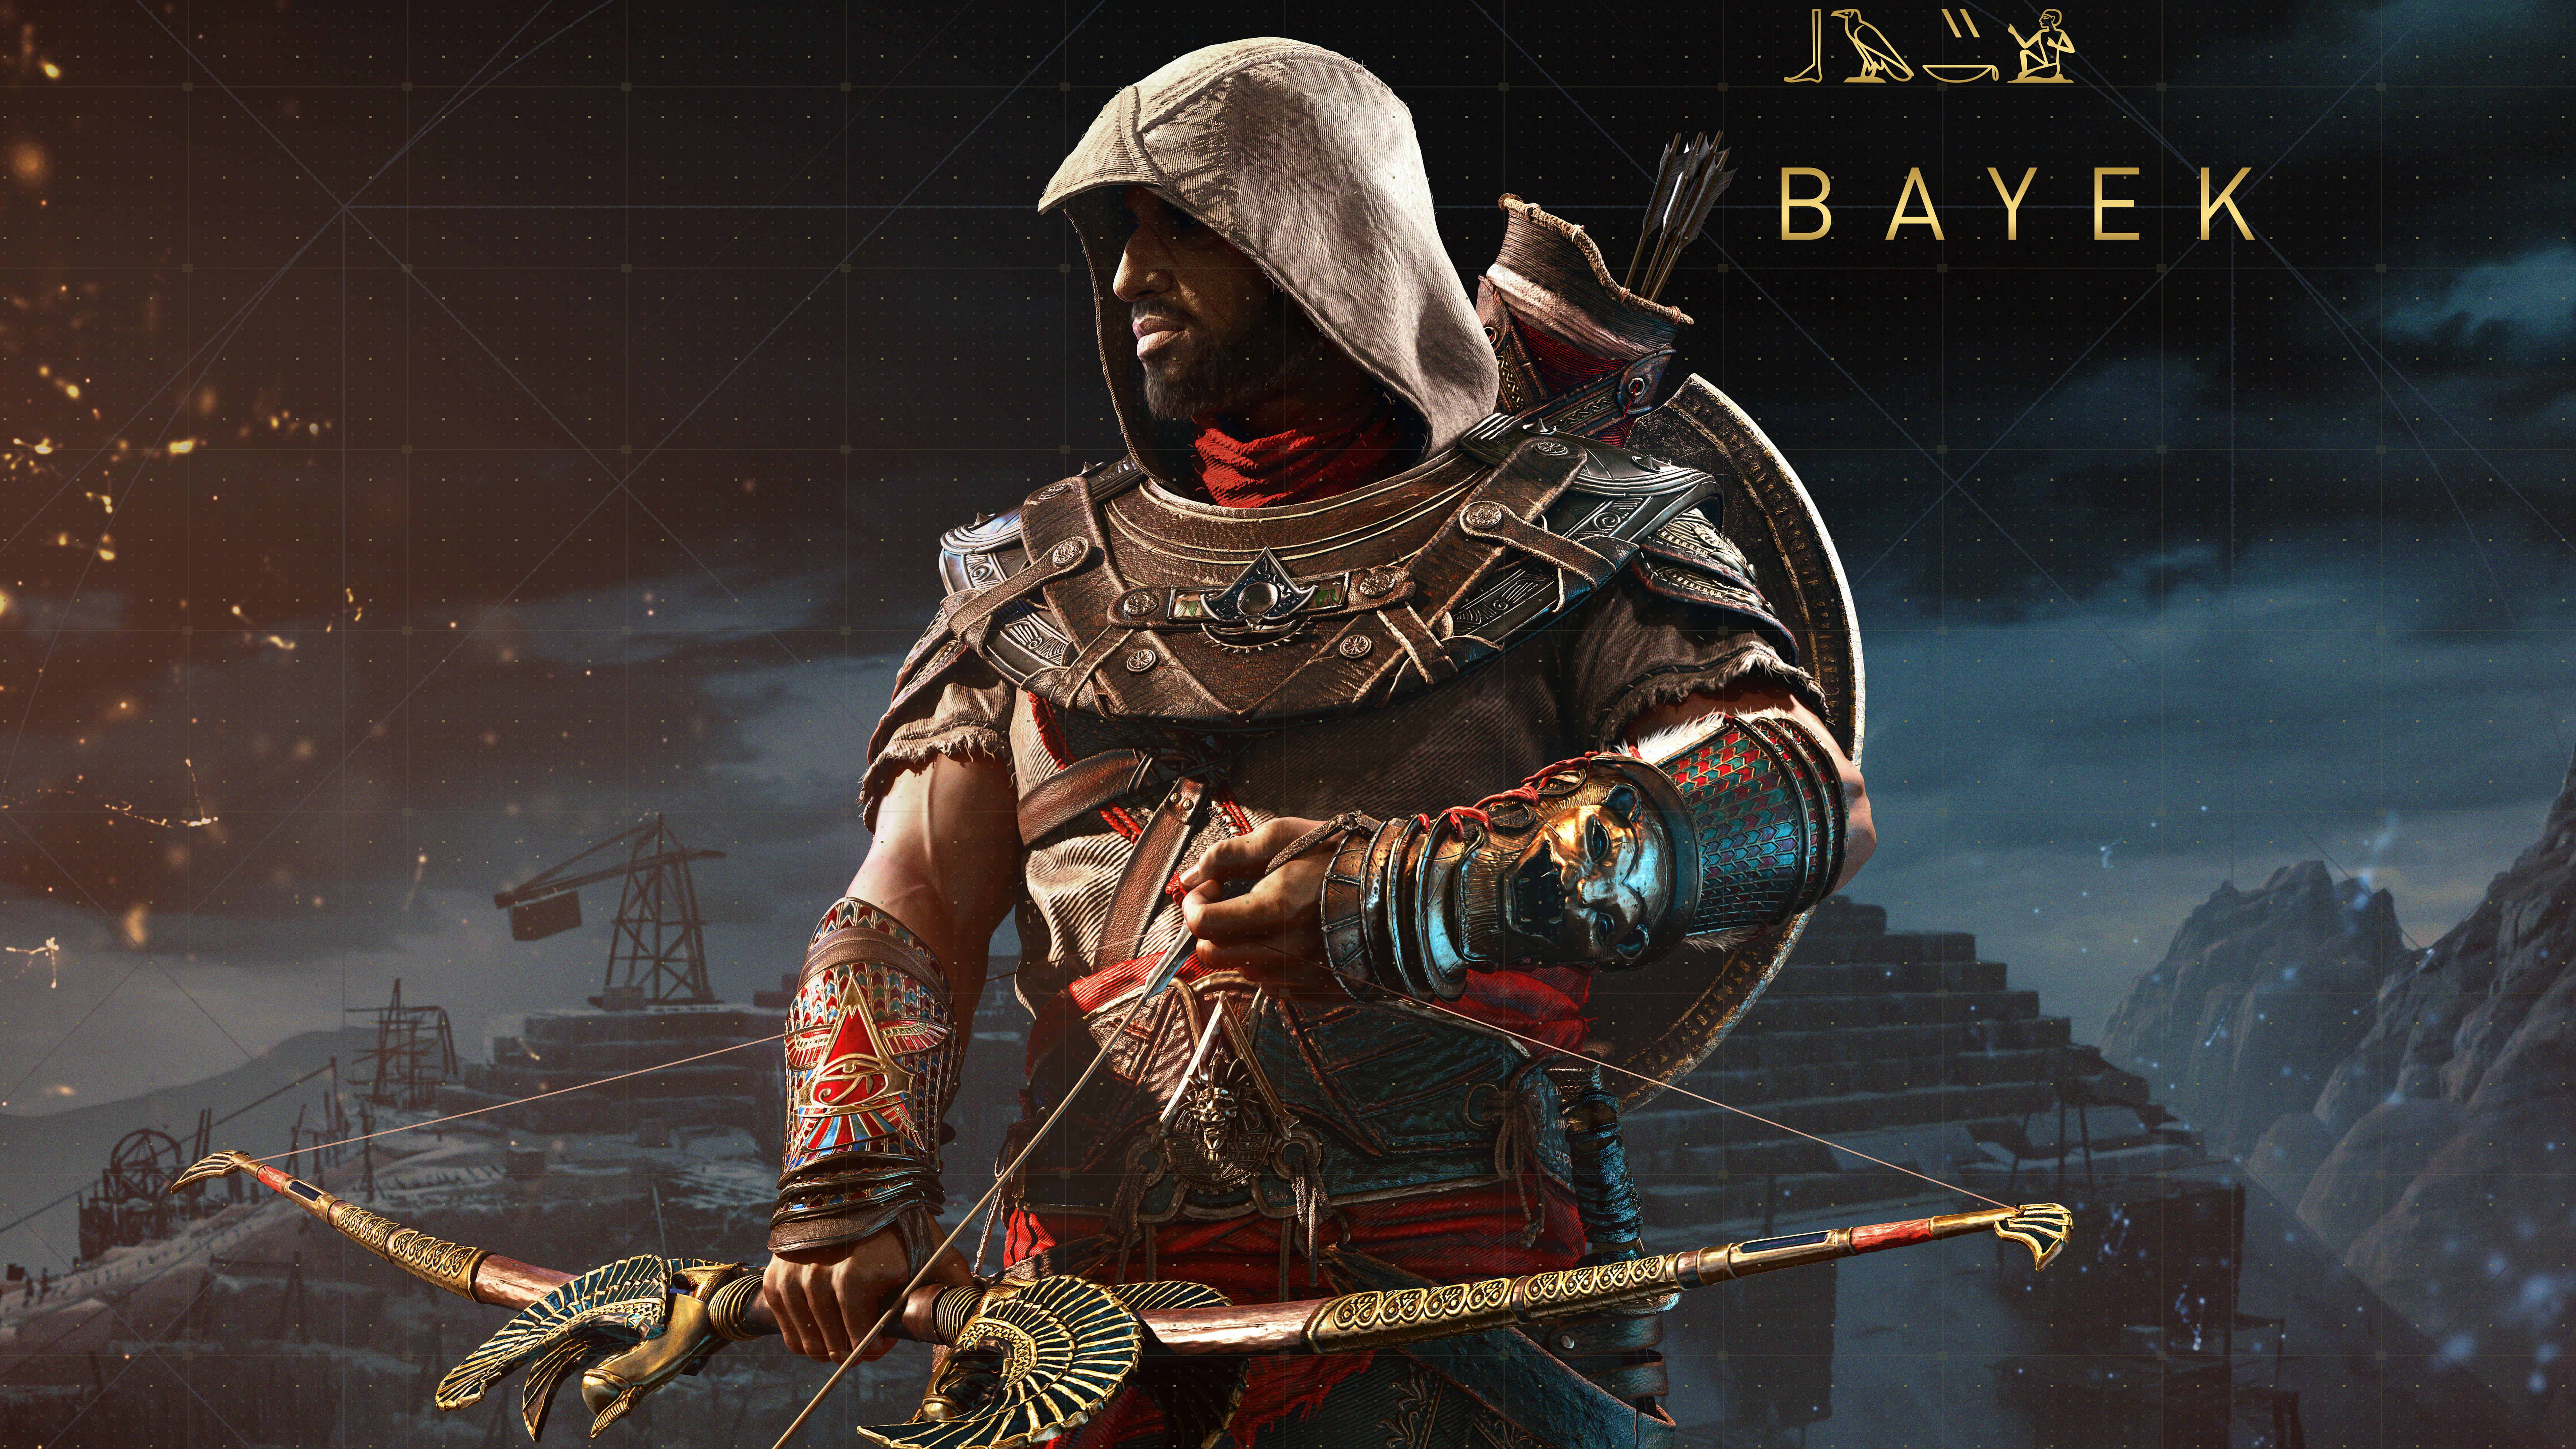 General 7680x4320 video games Assassin's Creed: Origins Assassin's Creed Ubisoft Bayek video game characters